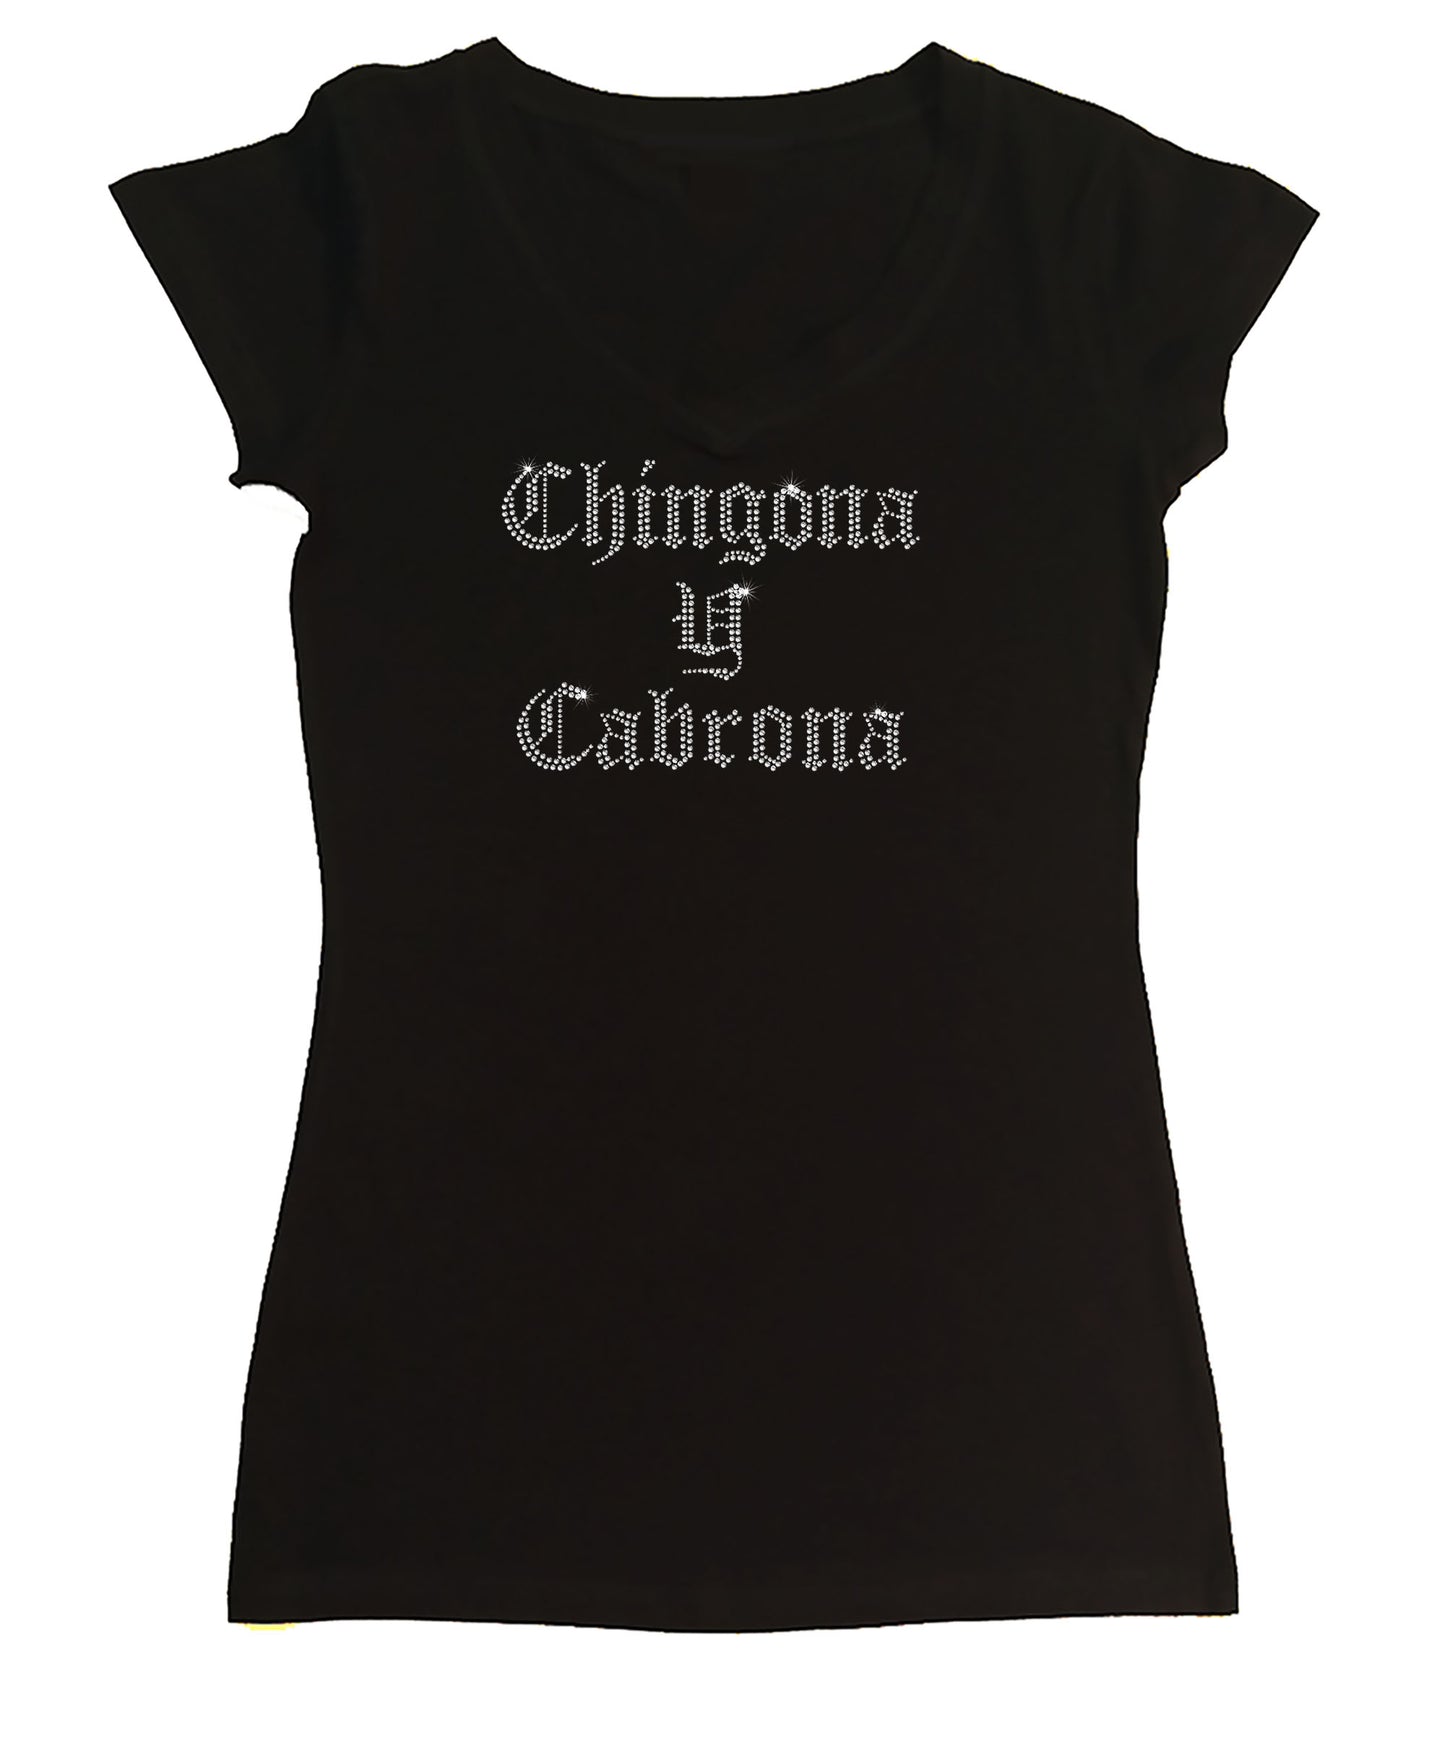 Women's Rhinestone Fitted Shirt Chingona y Cabrona